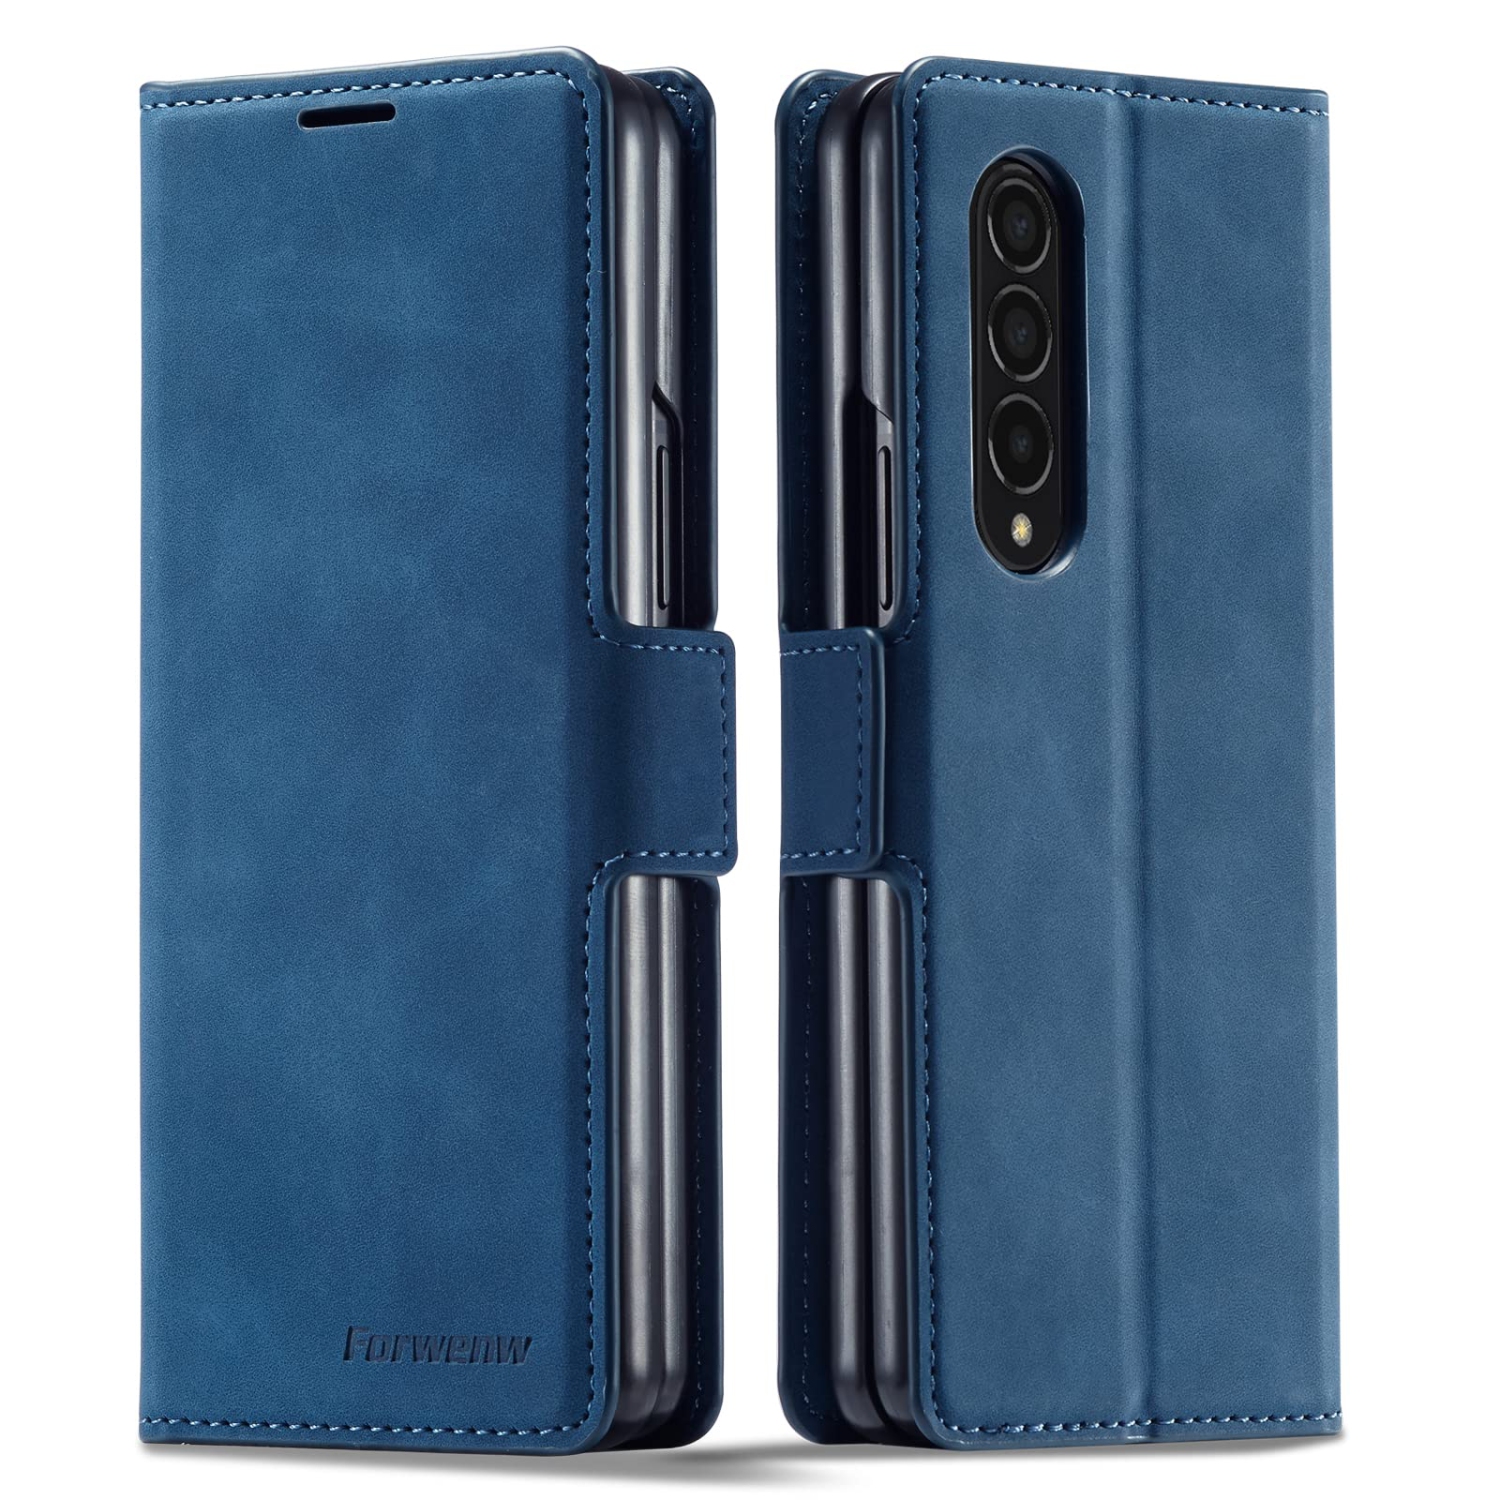 EYZUTAK Premium PU Leather Flip Folio Case for Samsung Galaxy Z Fold 4 5G, Protective Cover with Kickstand Card Slot Magneti